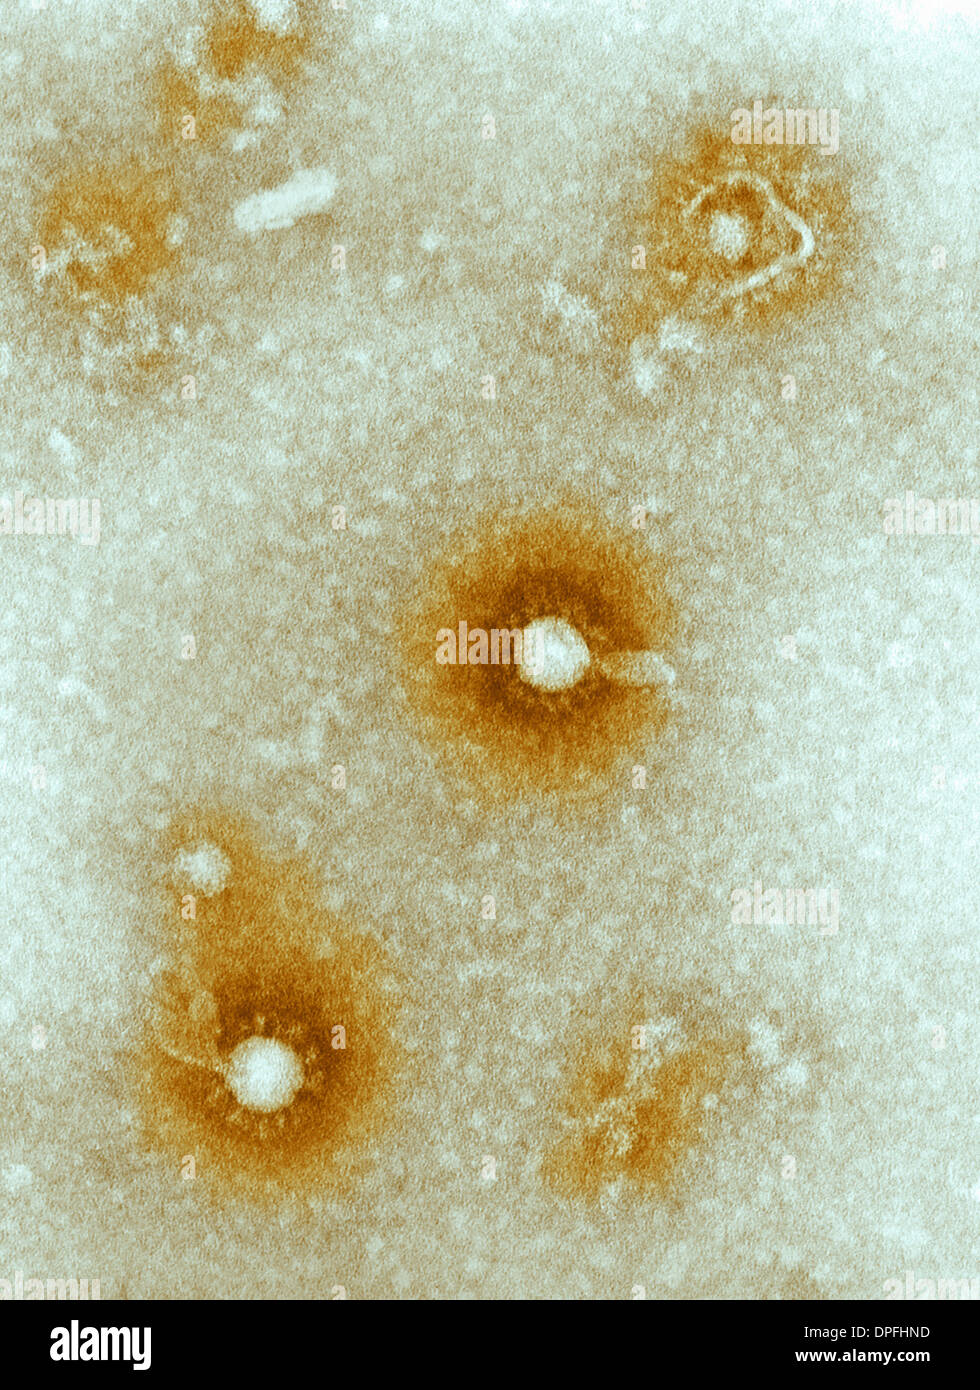 TEM of Eastern Equine Encephalitis (EEE) virus Stock Photo